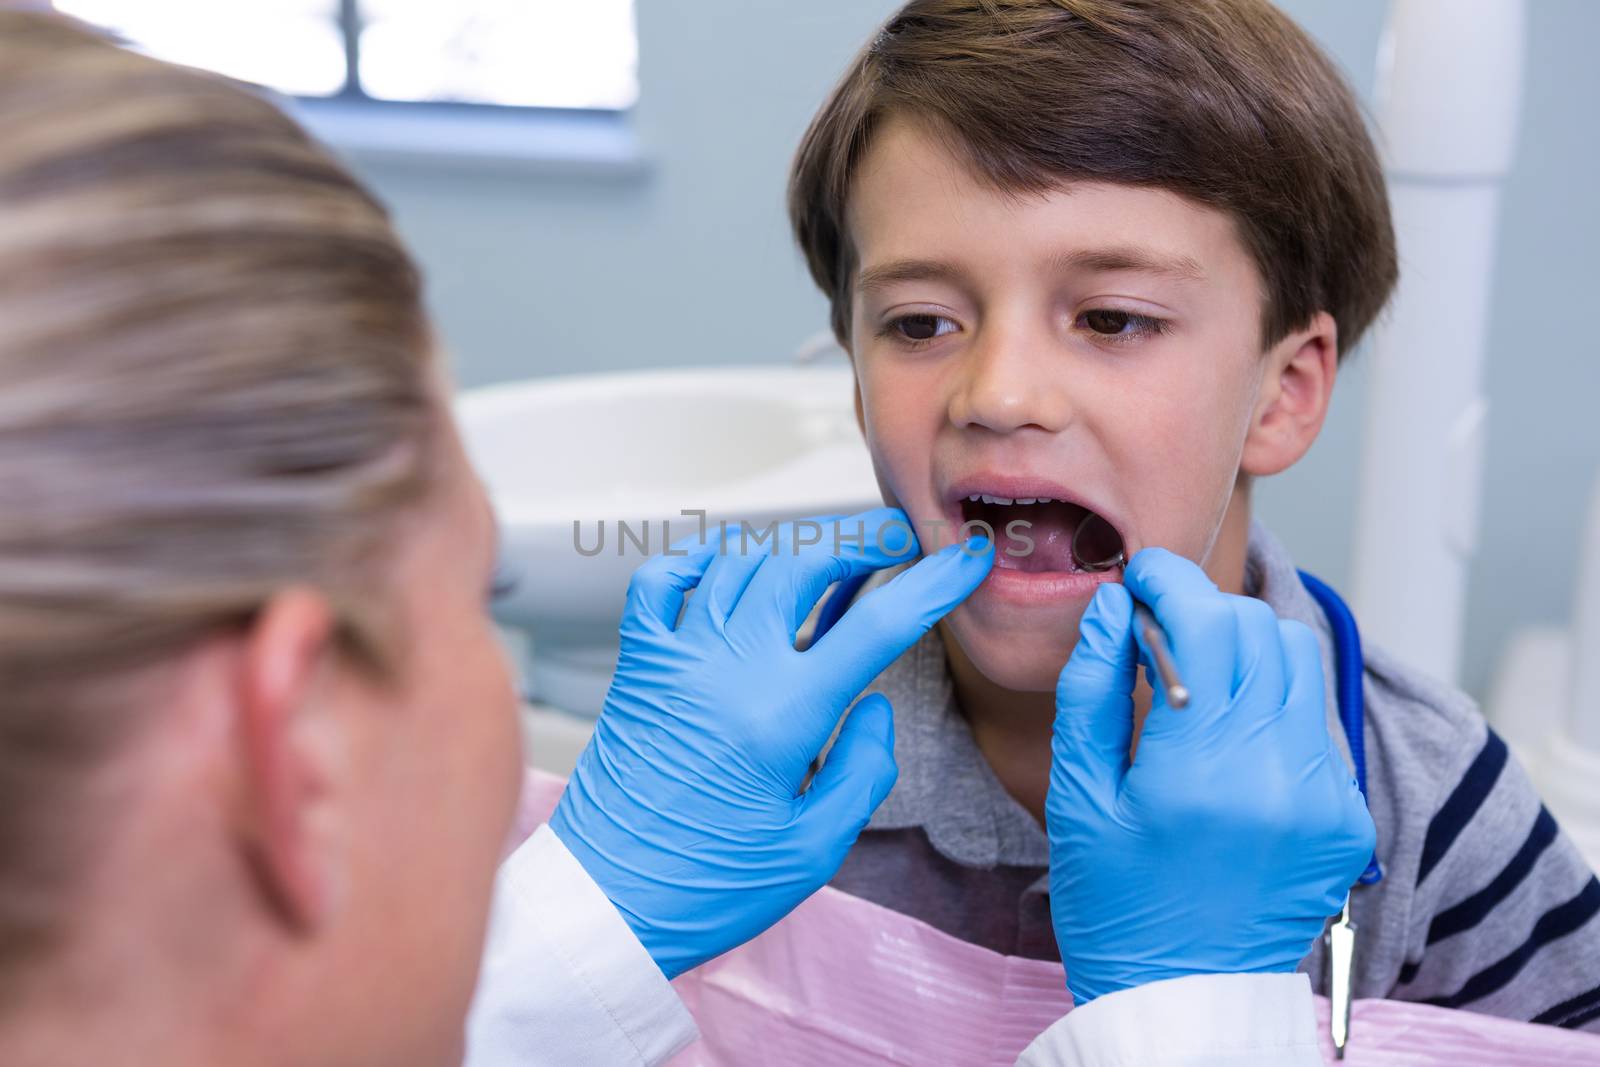 Close up of dentist examining boy at dental clinic